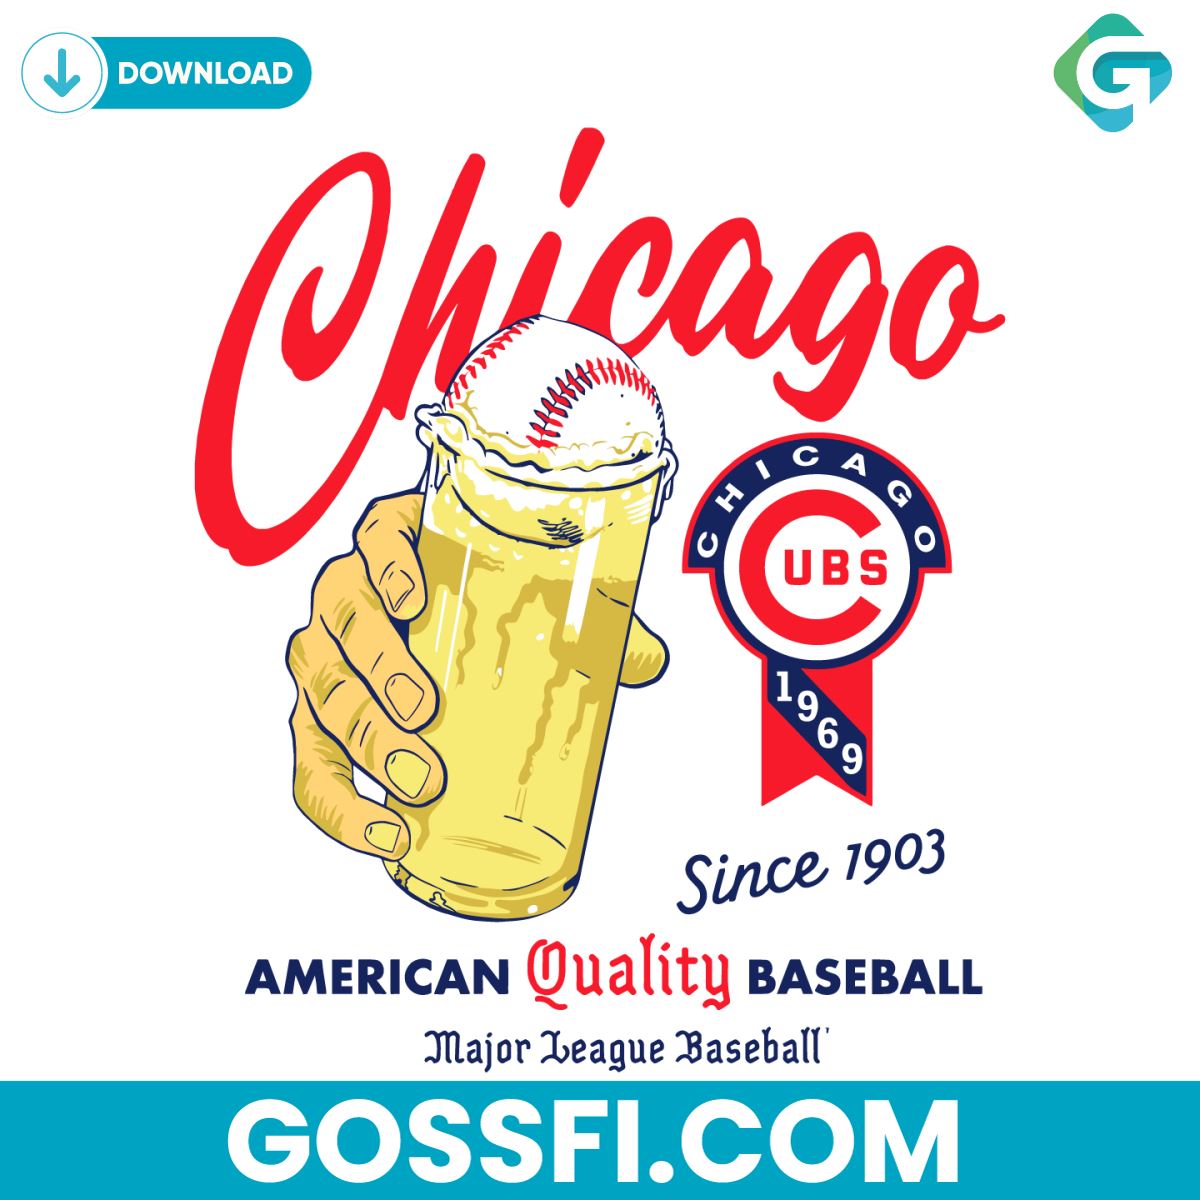 chicago-cubs-usb-since-1903-arimeca-quality-baseball-svg